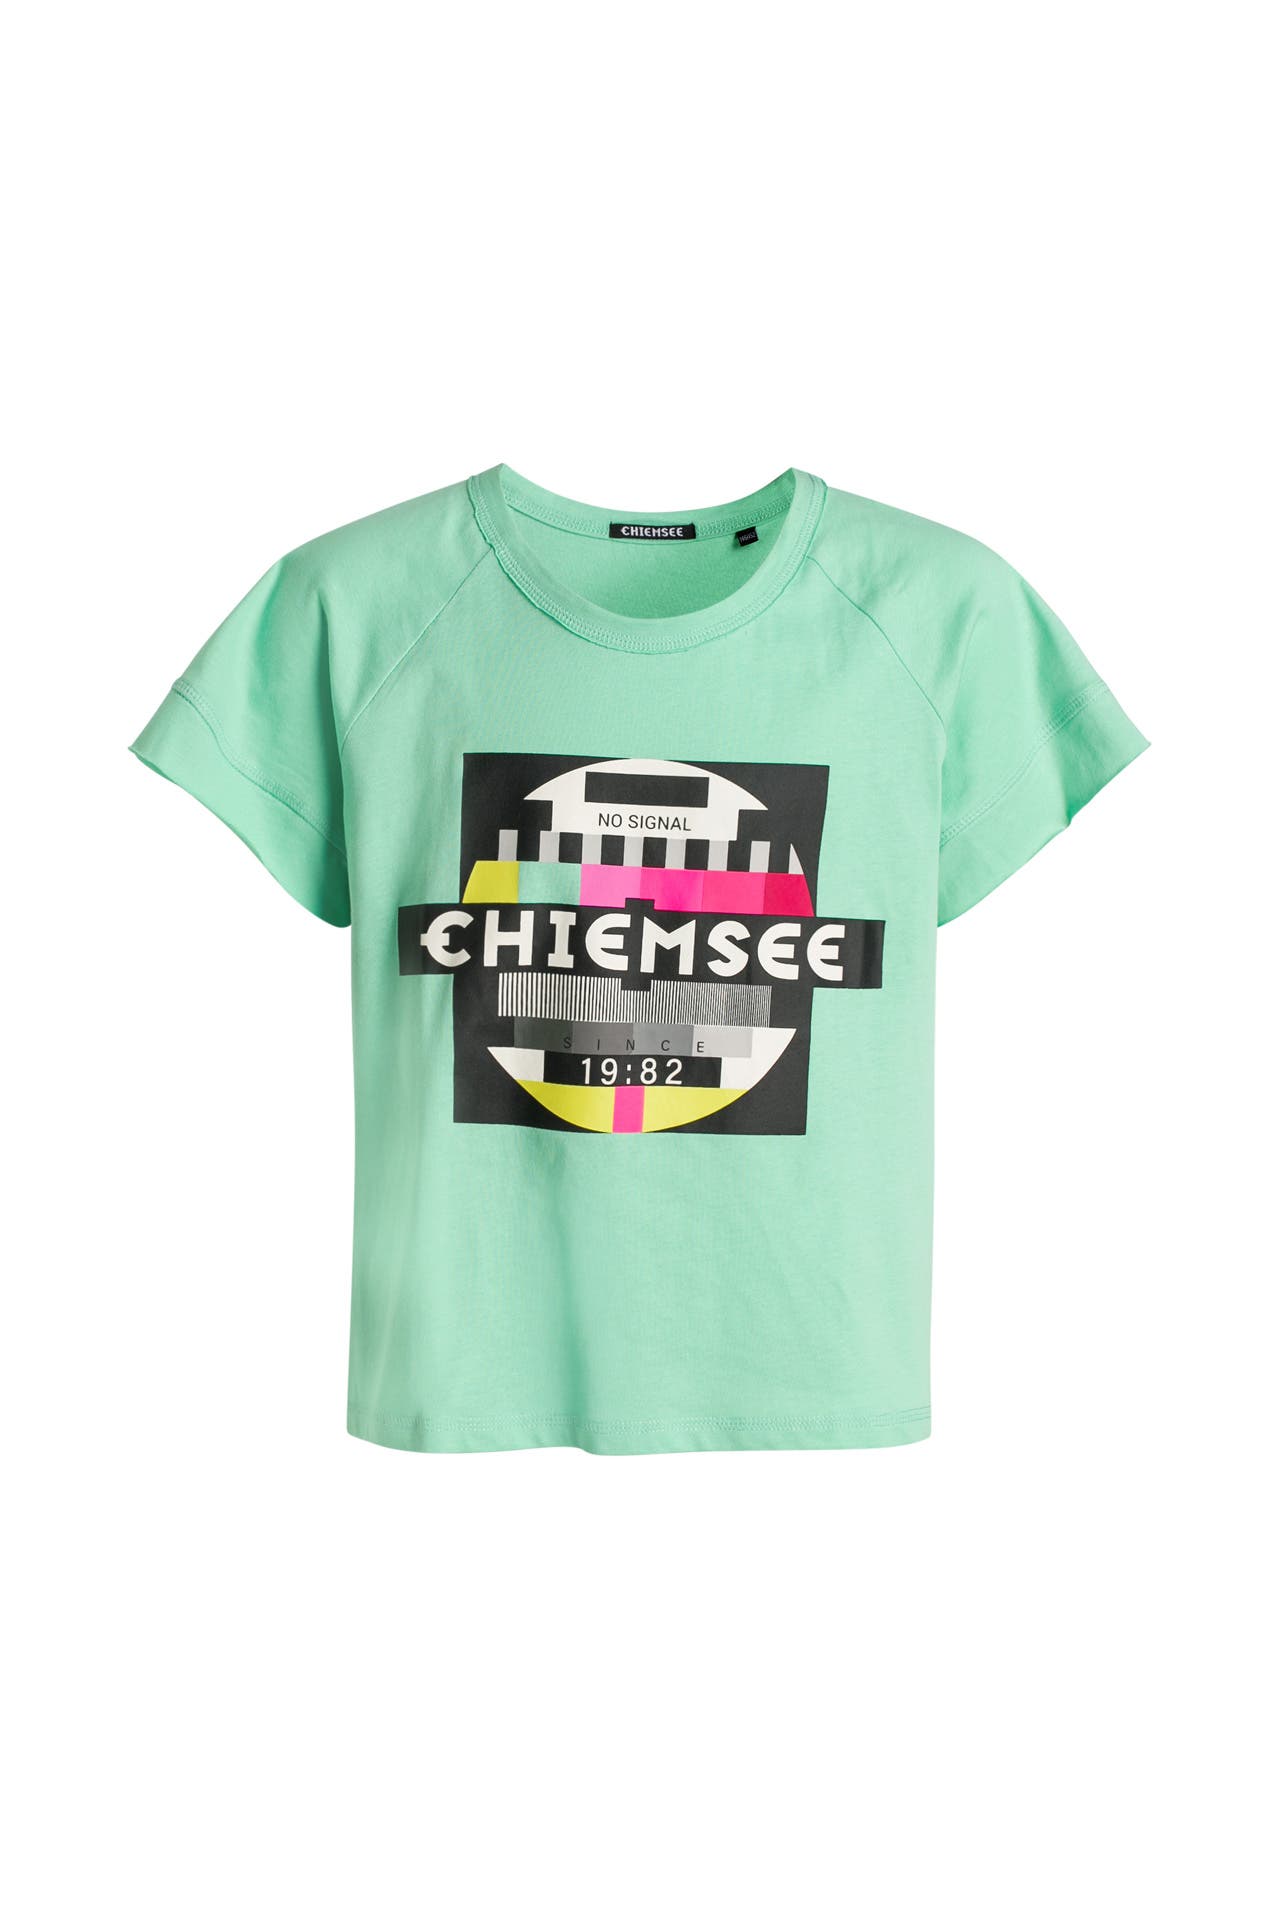 Outletcity CHIEMSEE » - kaufen T-Shirt mintgrün günstig | online